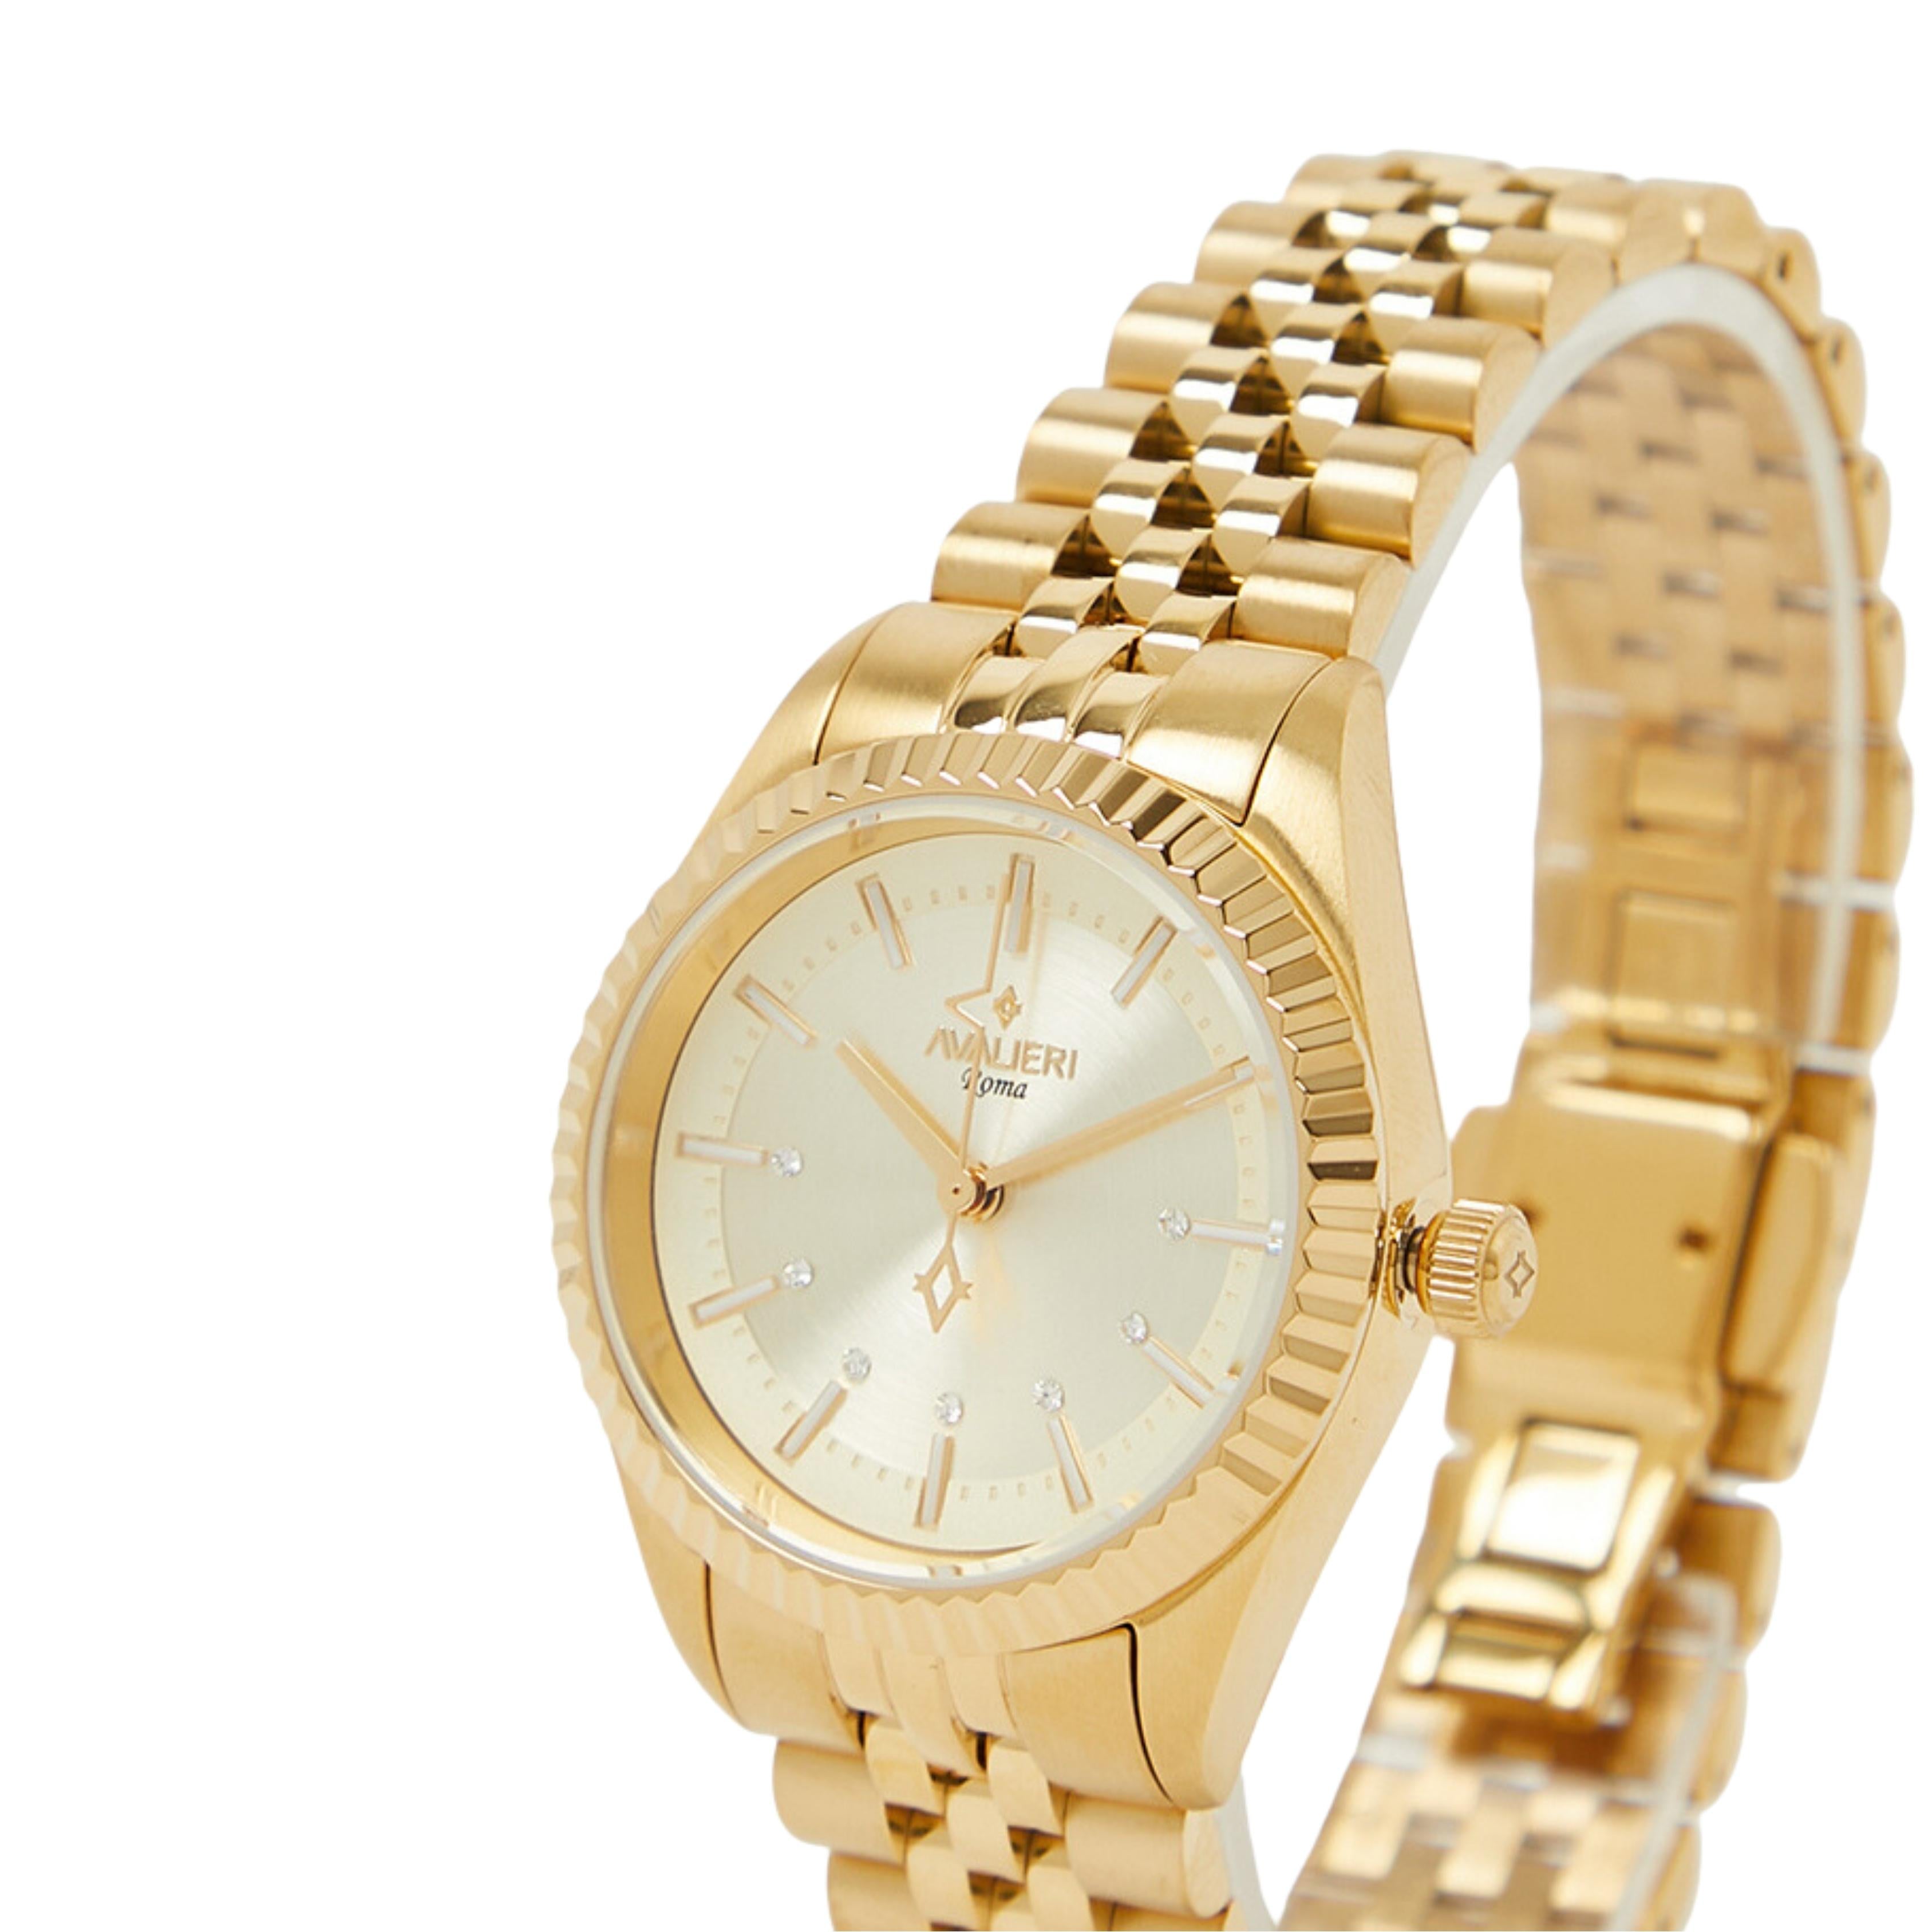 Avalieri Women's Quartz Watch Gold Dial - AV-2604B